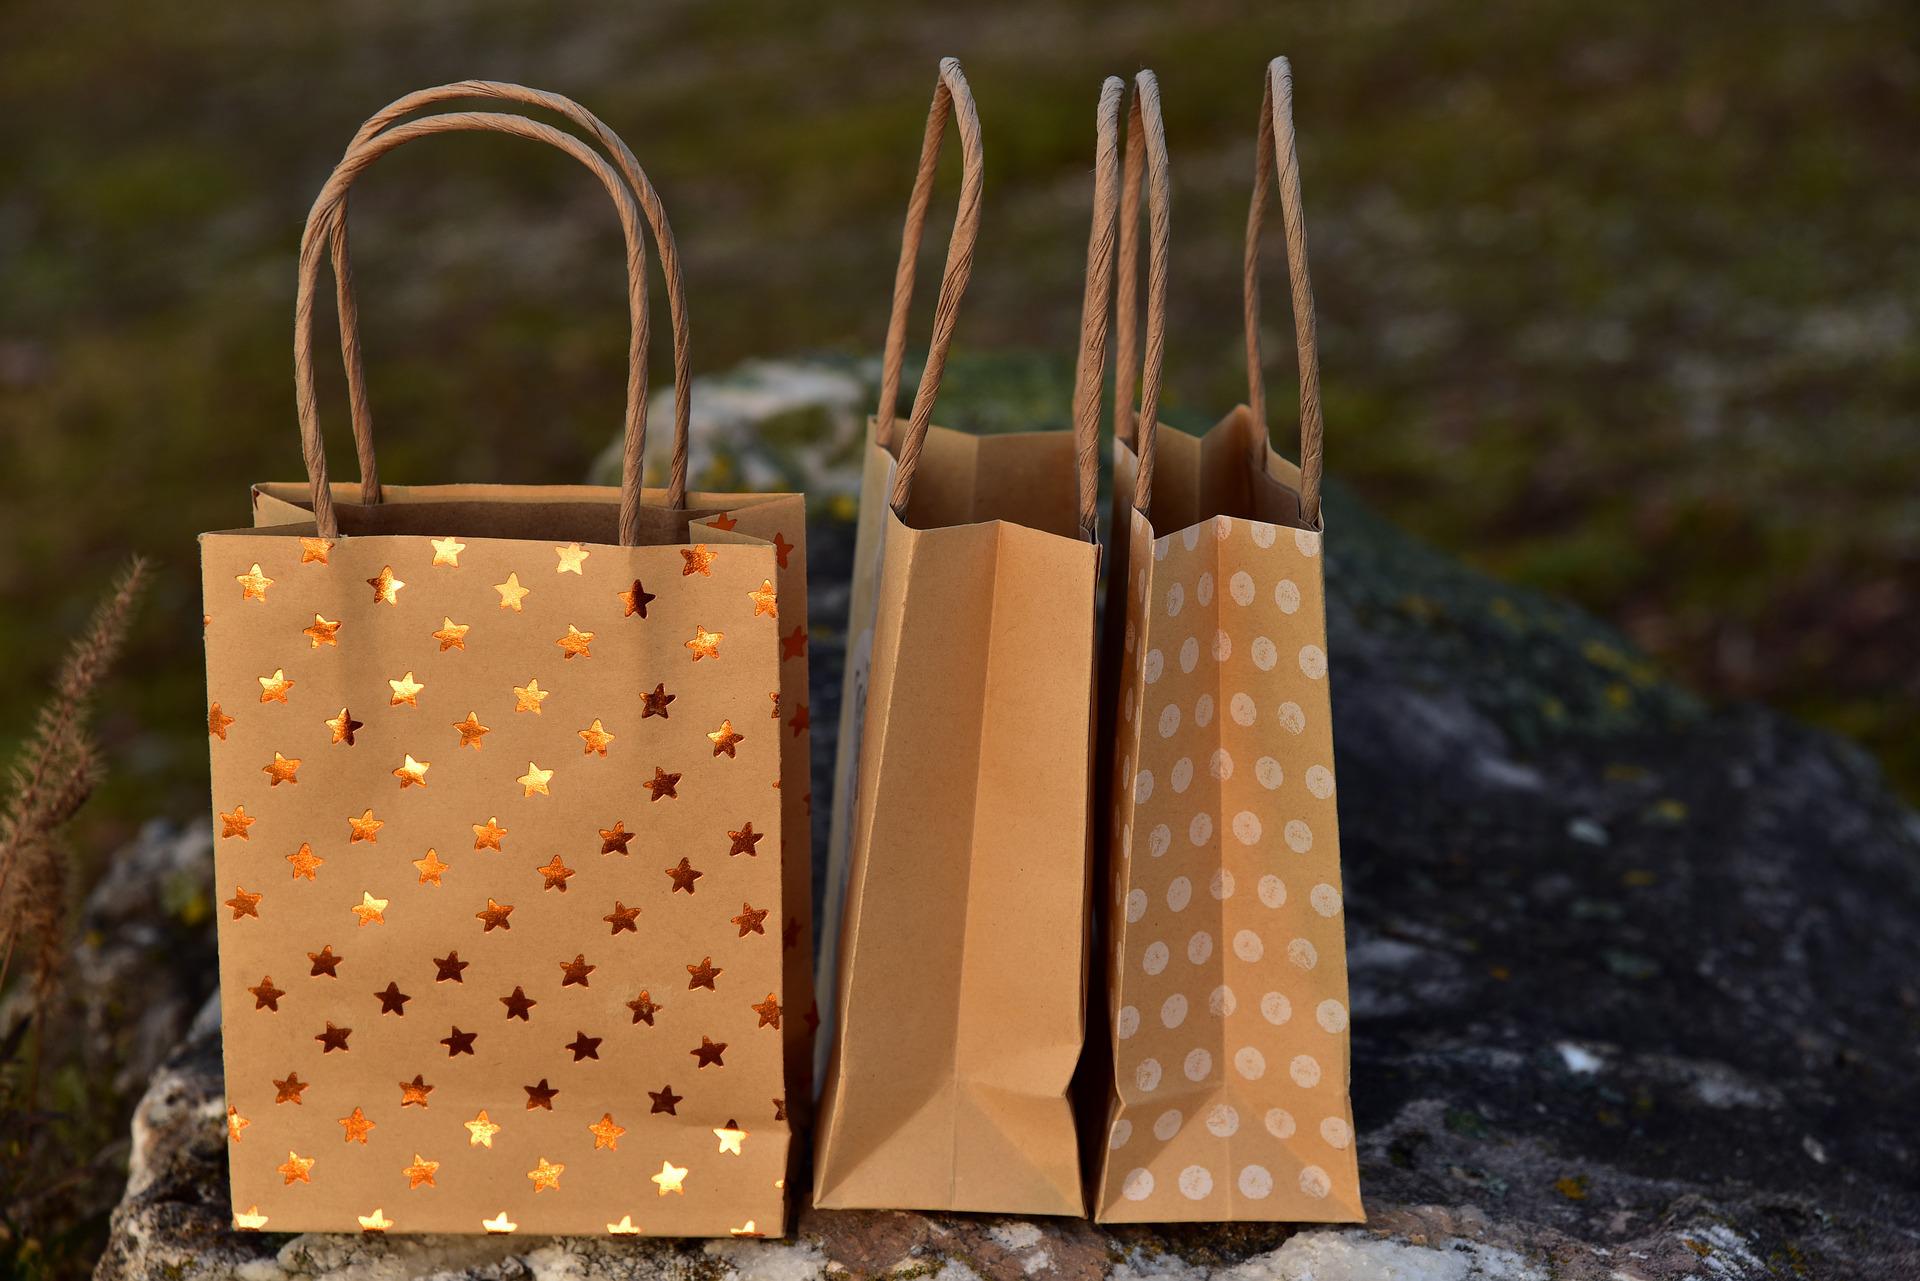 3 brown shopping bags